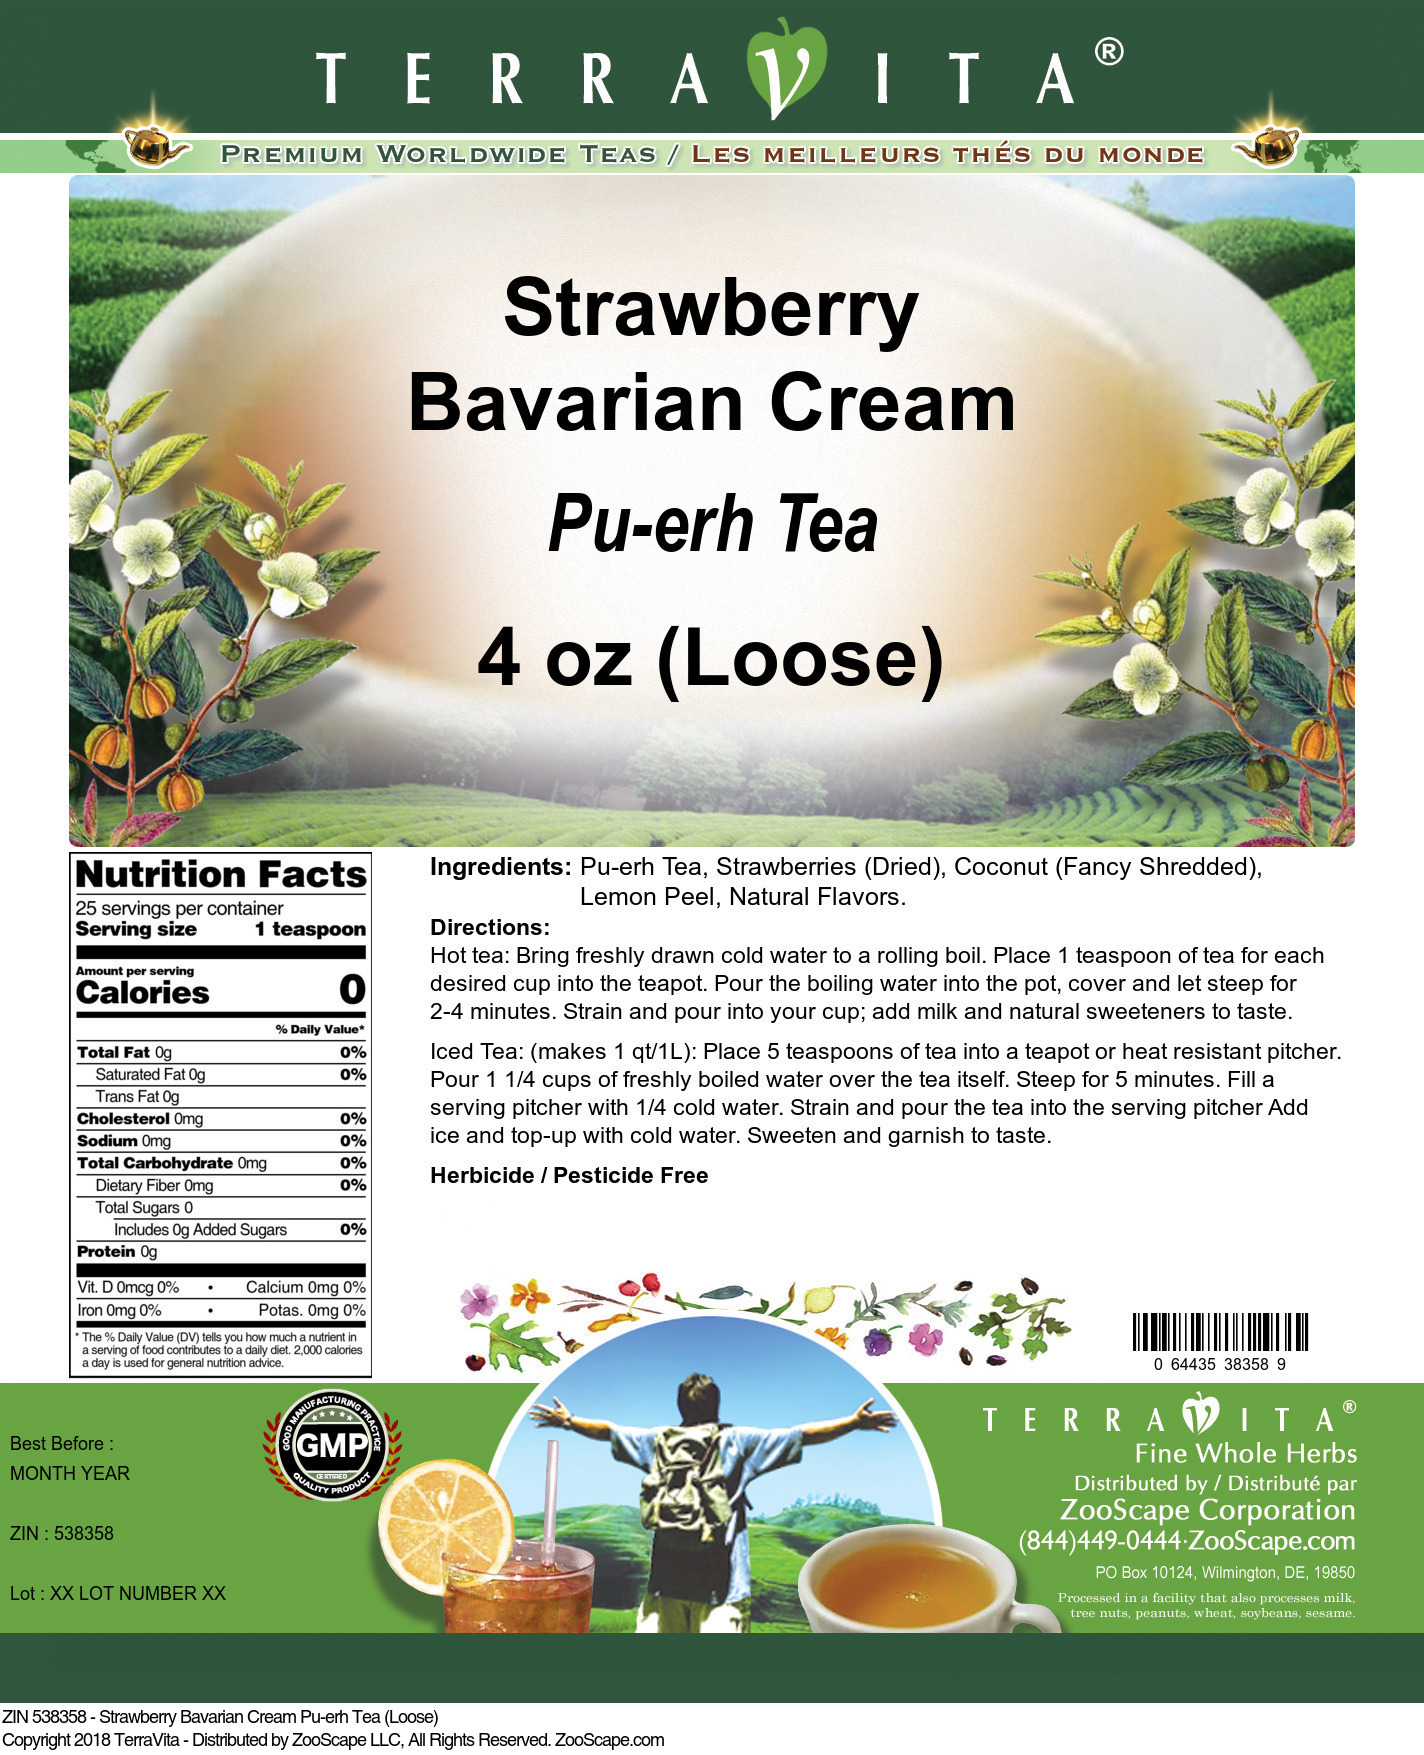 Strawberry Bavarian Cream Pu-erh Tea (Loose) - Label